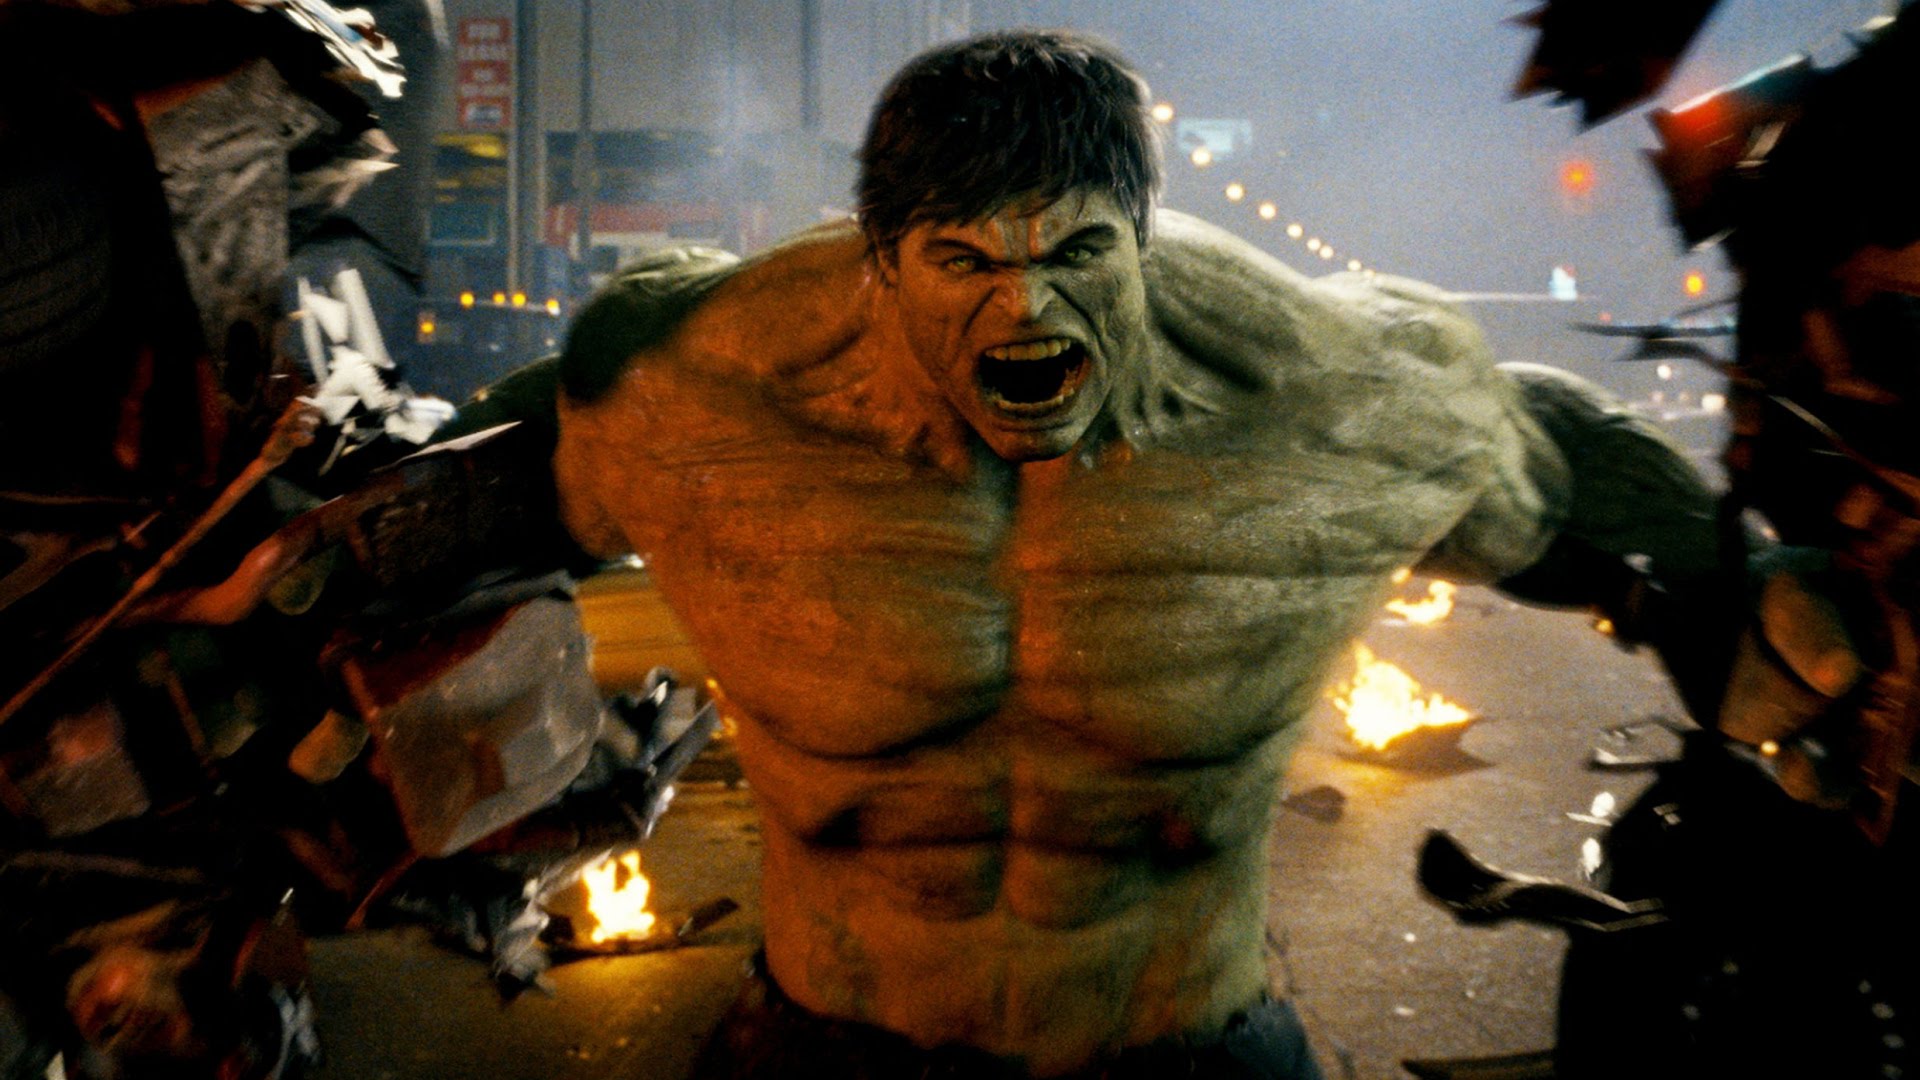 Film The Incredible Hulk Fond d'écran HD | Image